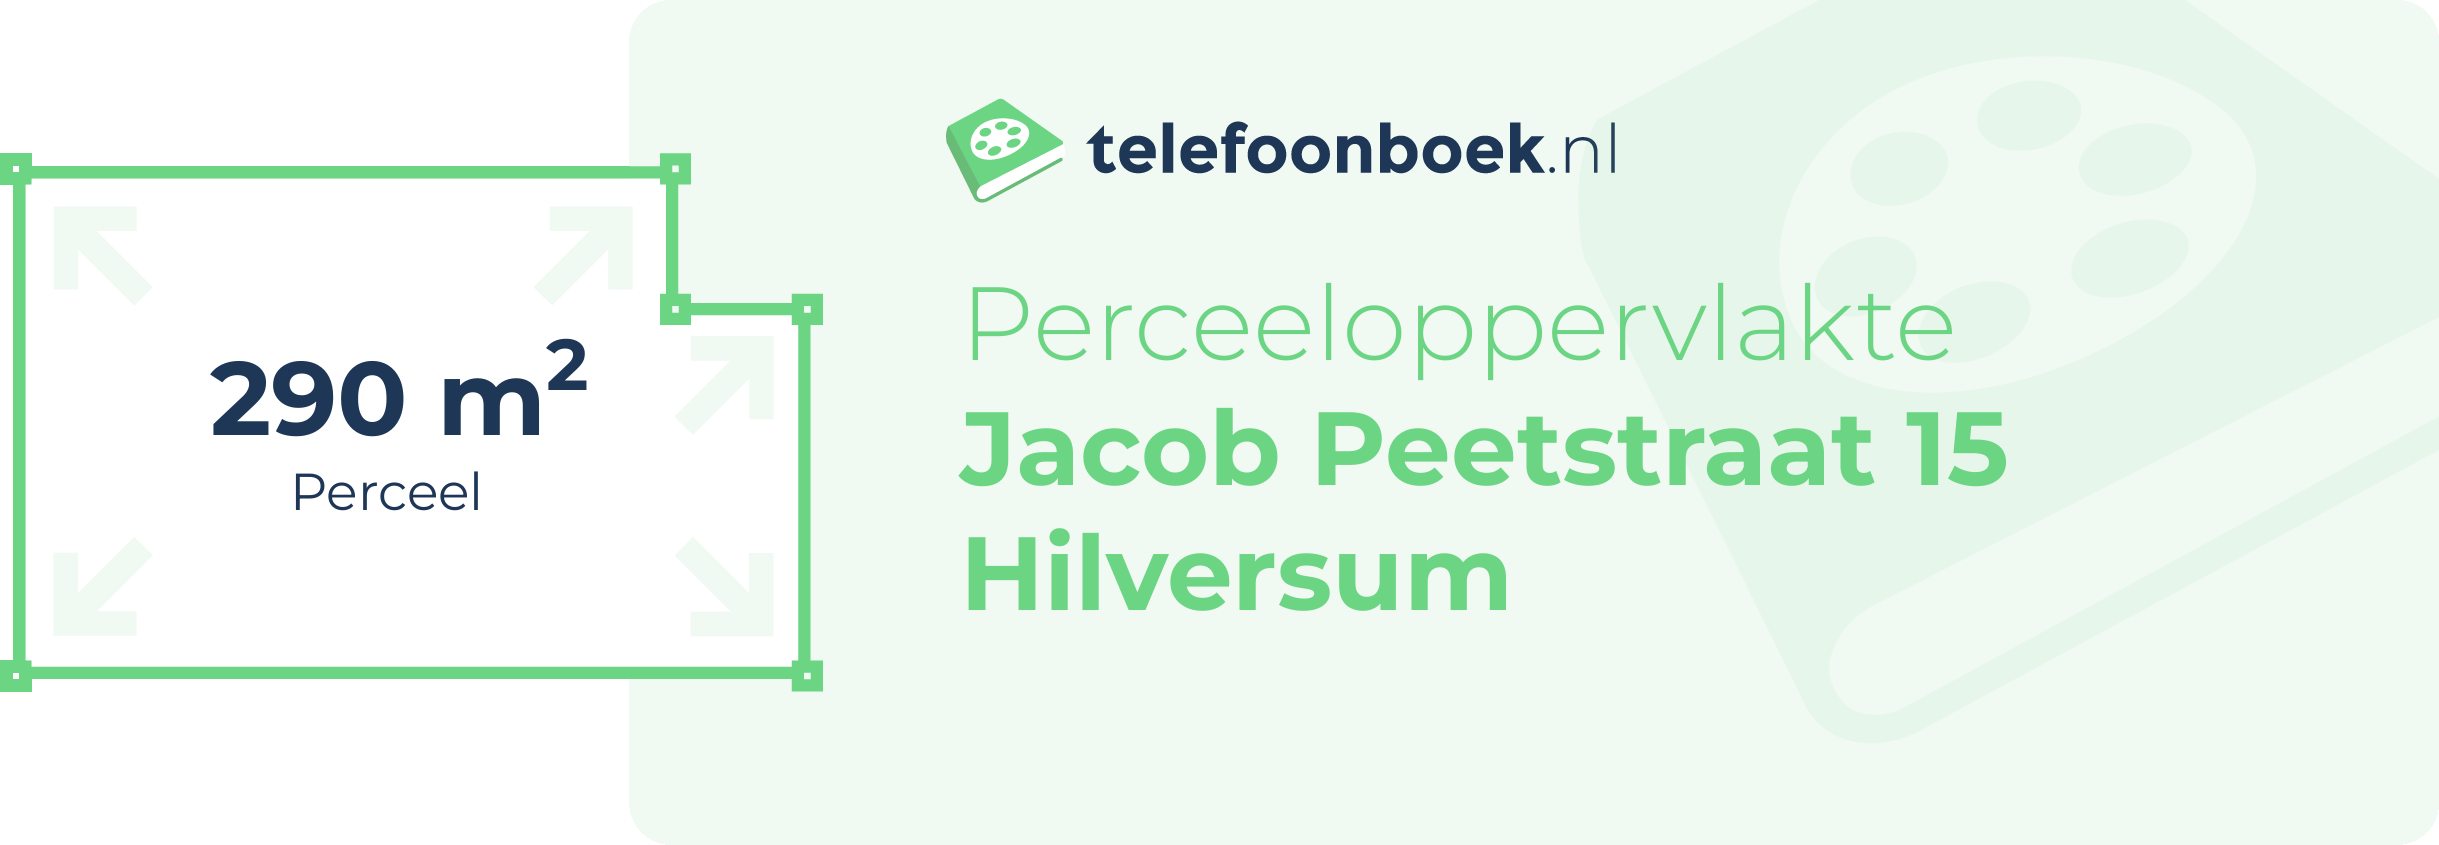 Perceeloppervlakte Jacob Peetstraat 15 Hilversum